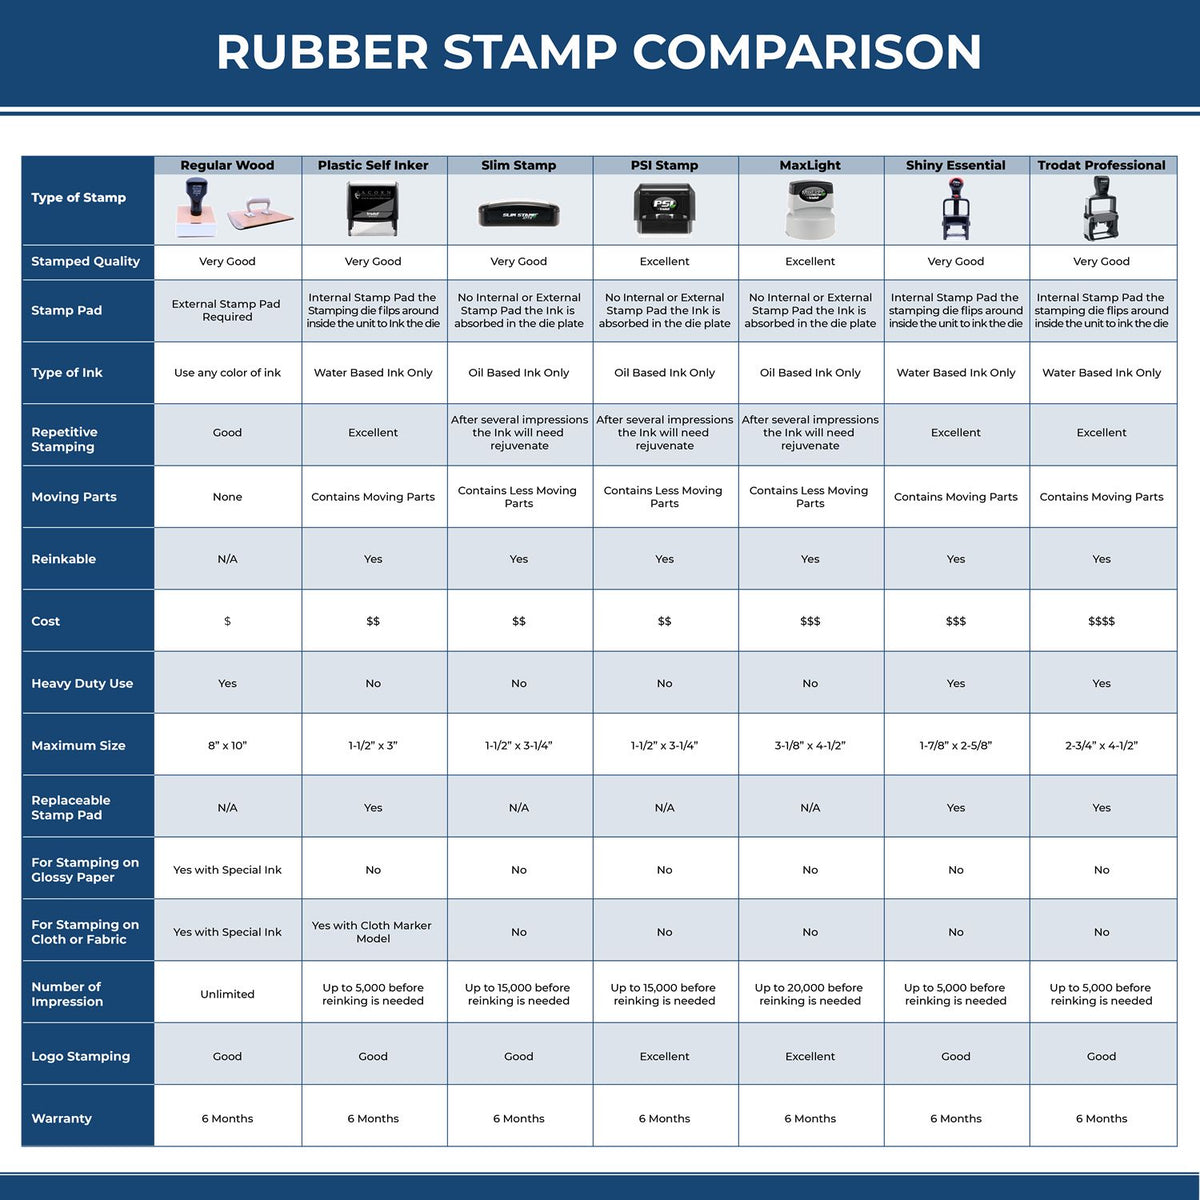 Large Invoice Rubber Stamp 4932R Rubber Stamp Comparison